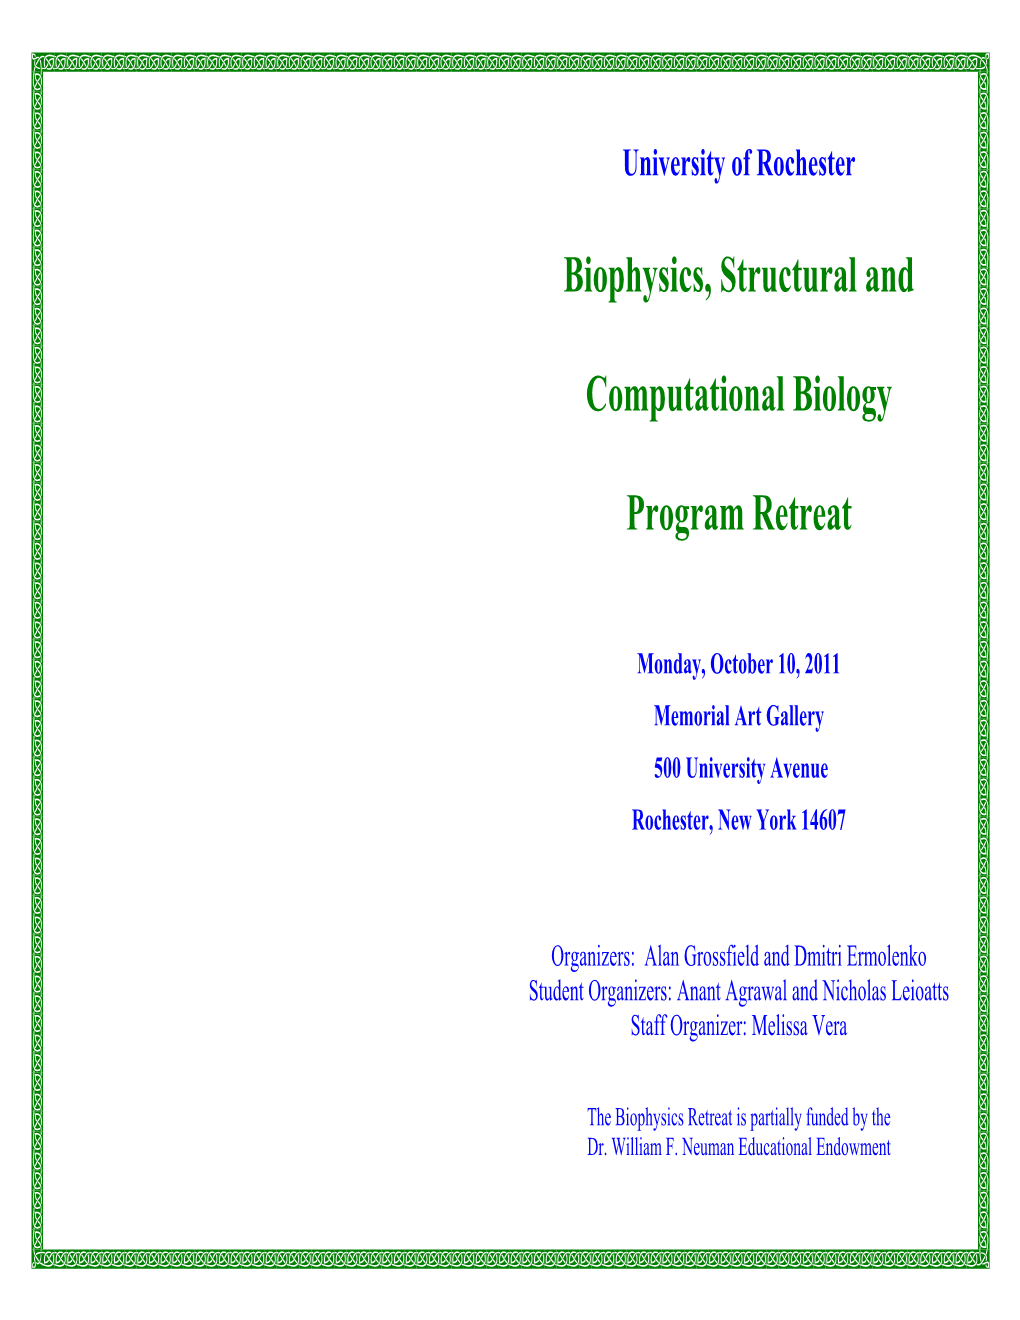 Biophysics, Structural and Computational Biology Program